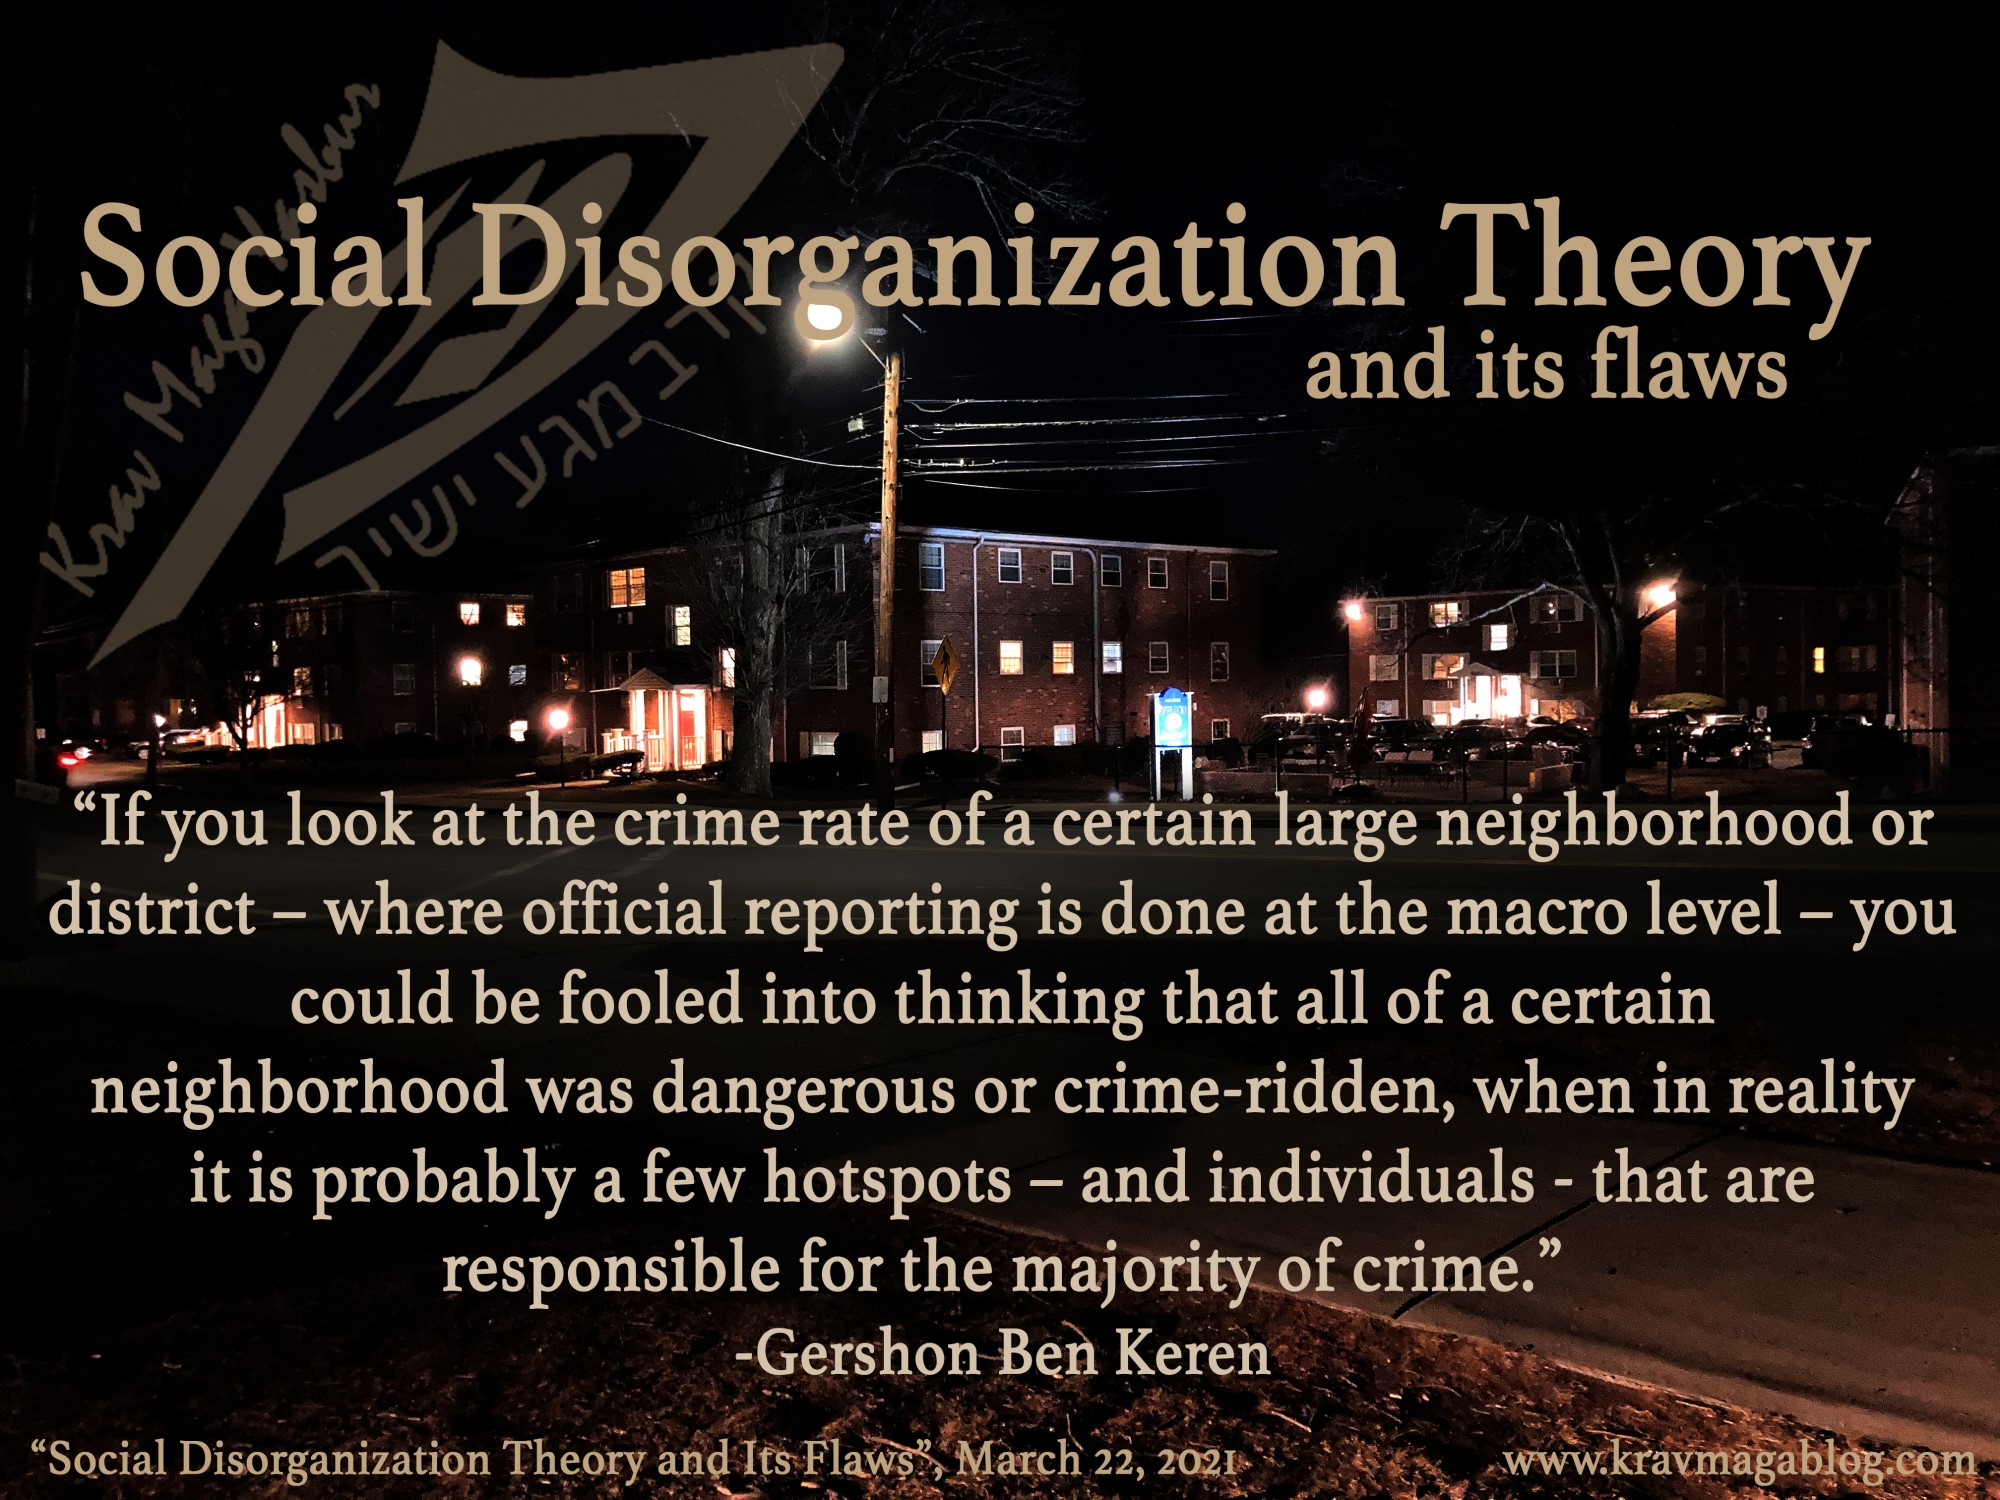 Blog About Social Disorganization Theory & Its Flaws